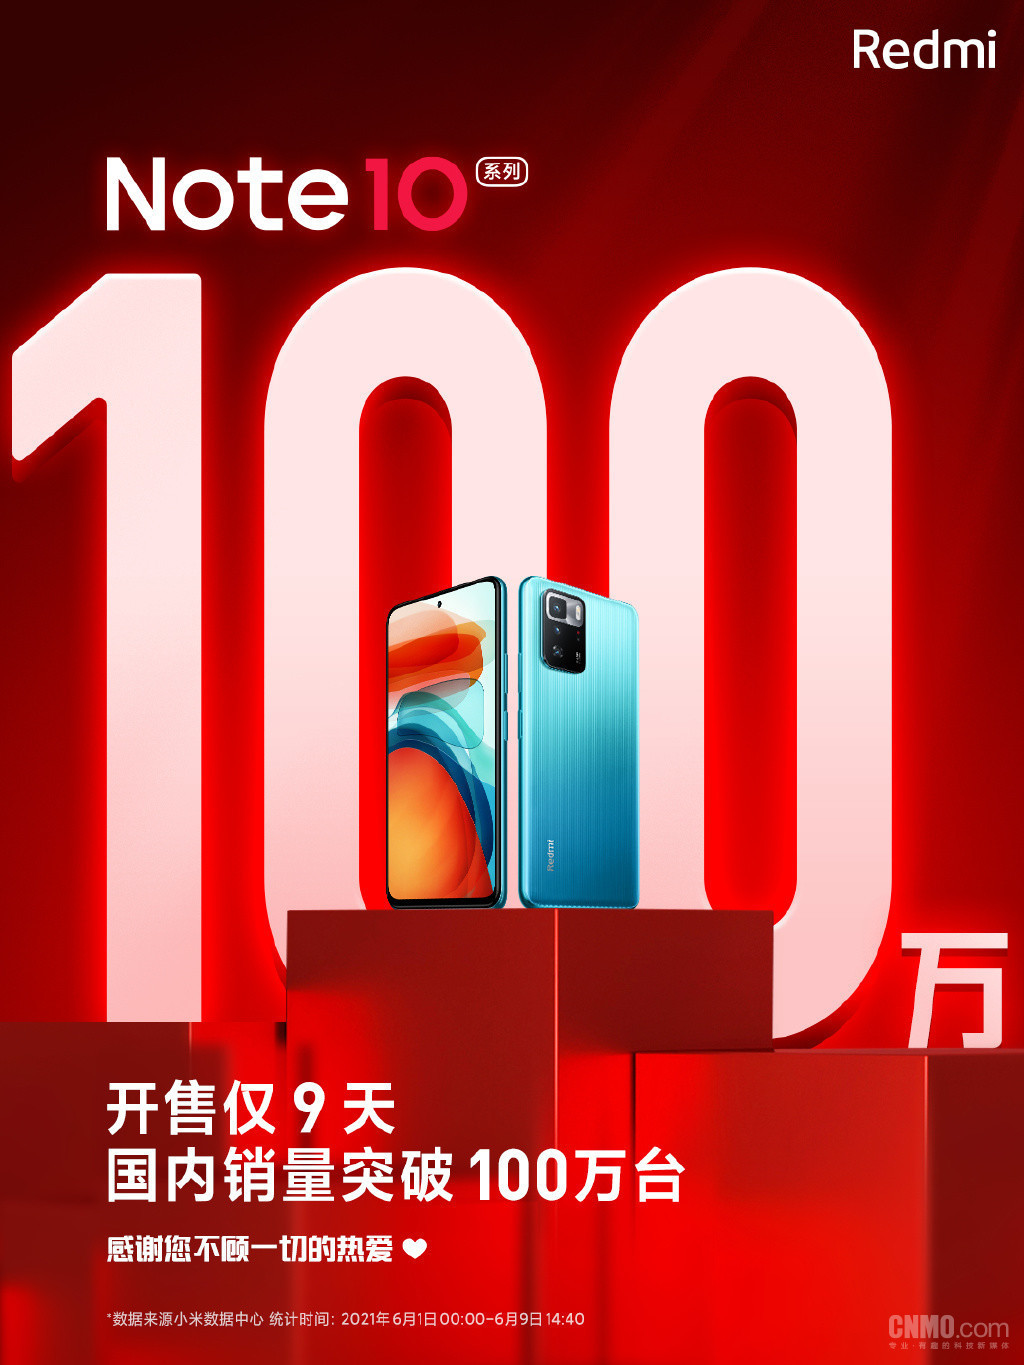 Redmi Note 10 Series Sales China